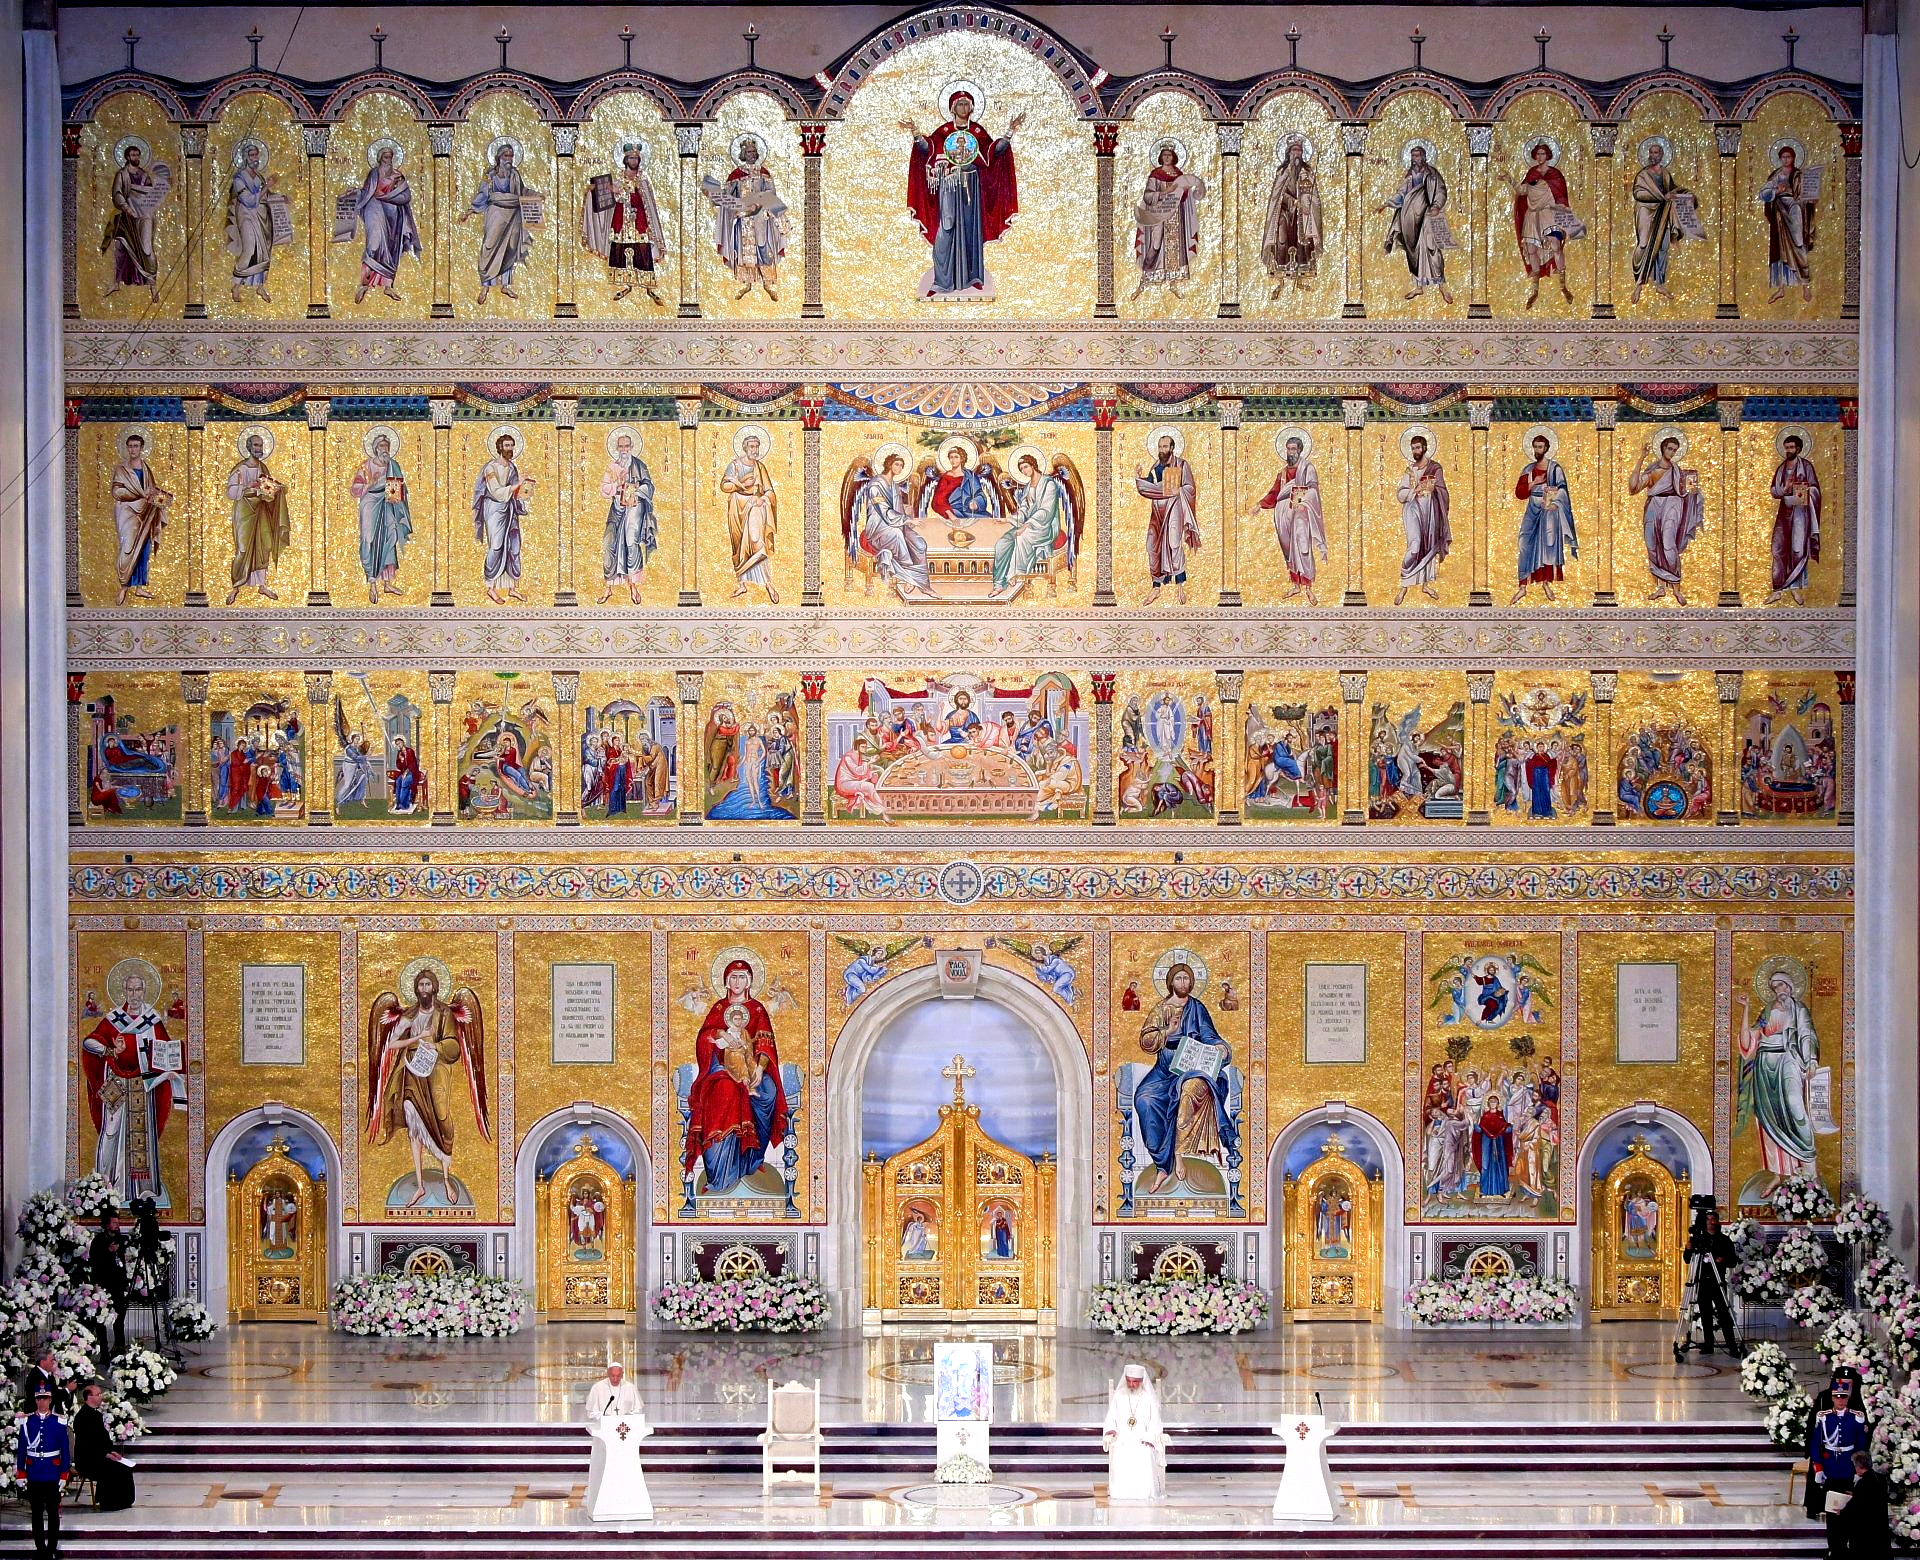 
Largest Orthodox iconostasis: Romania's National Cathedral sets world record